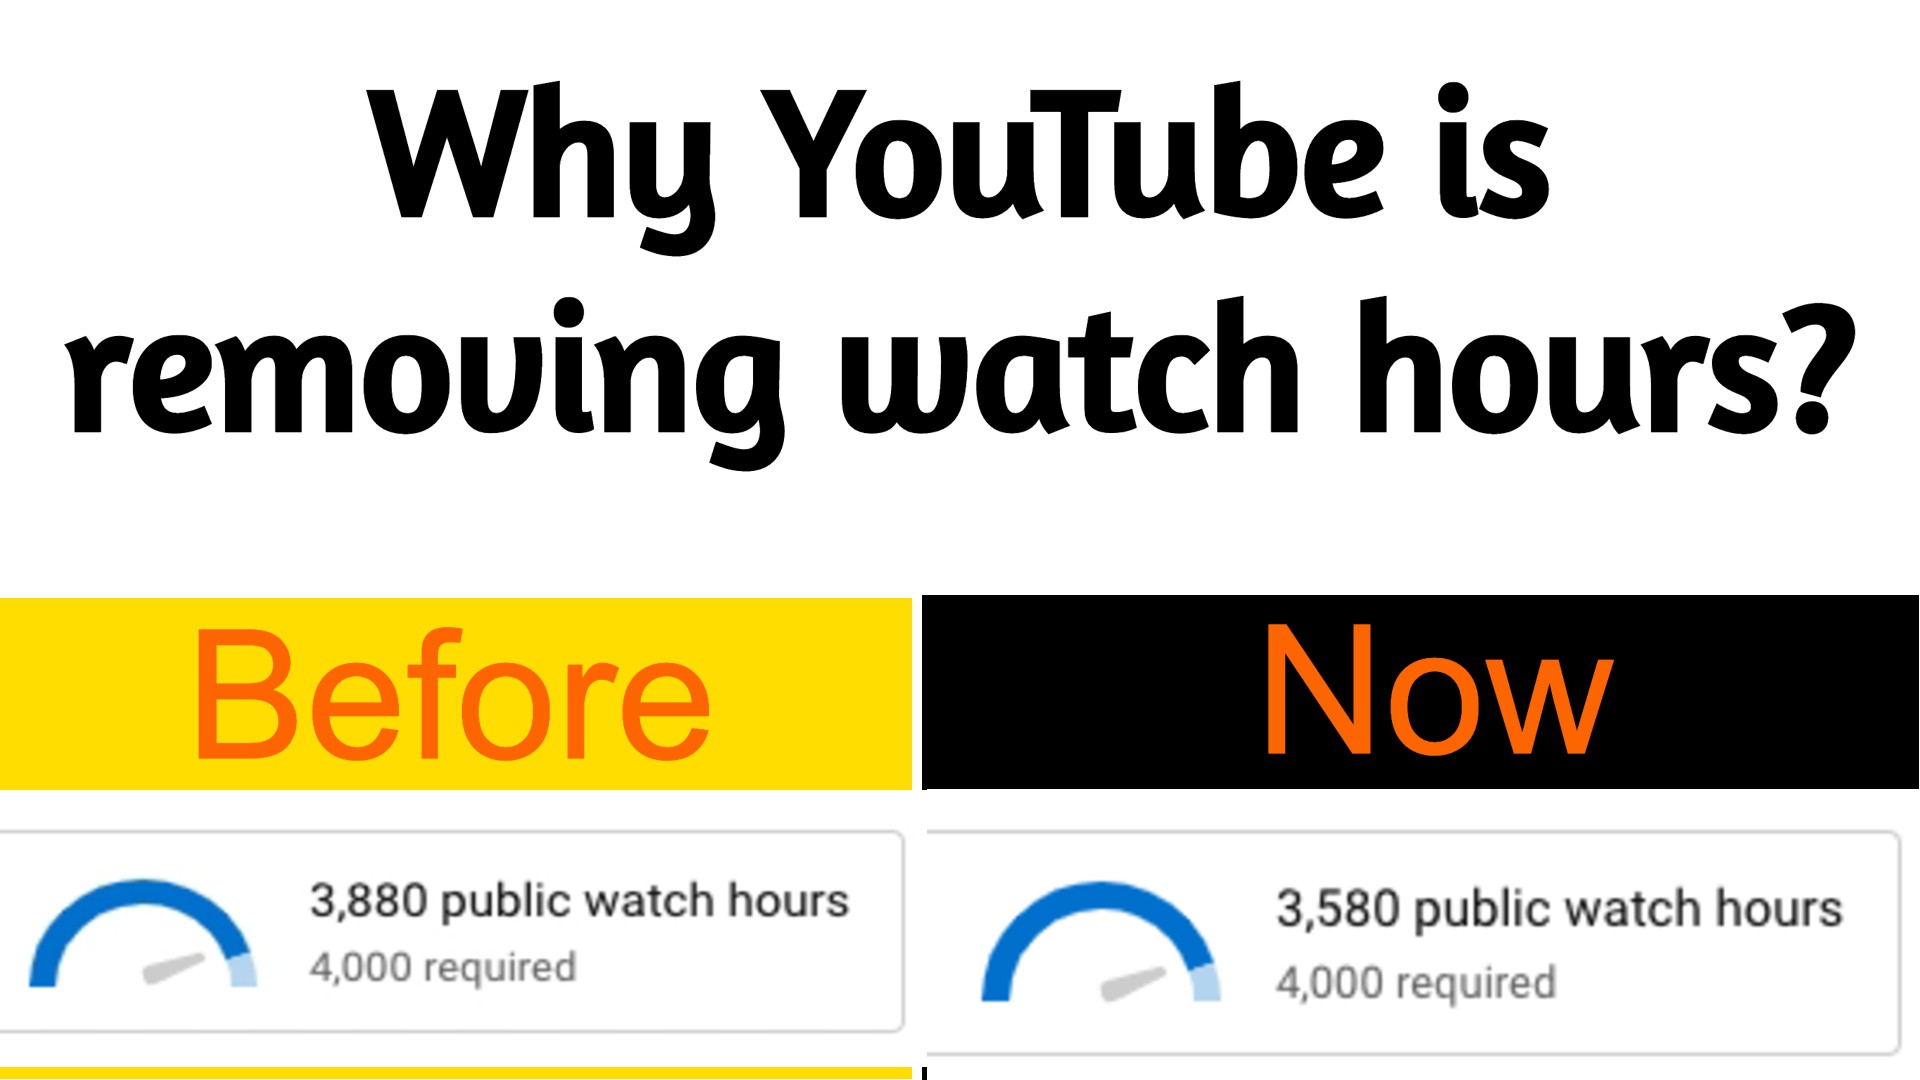 Watch youtube. Public watch